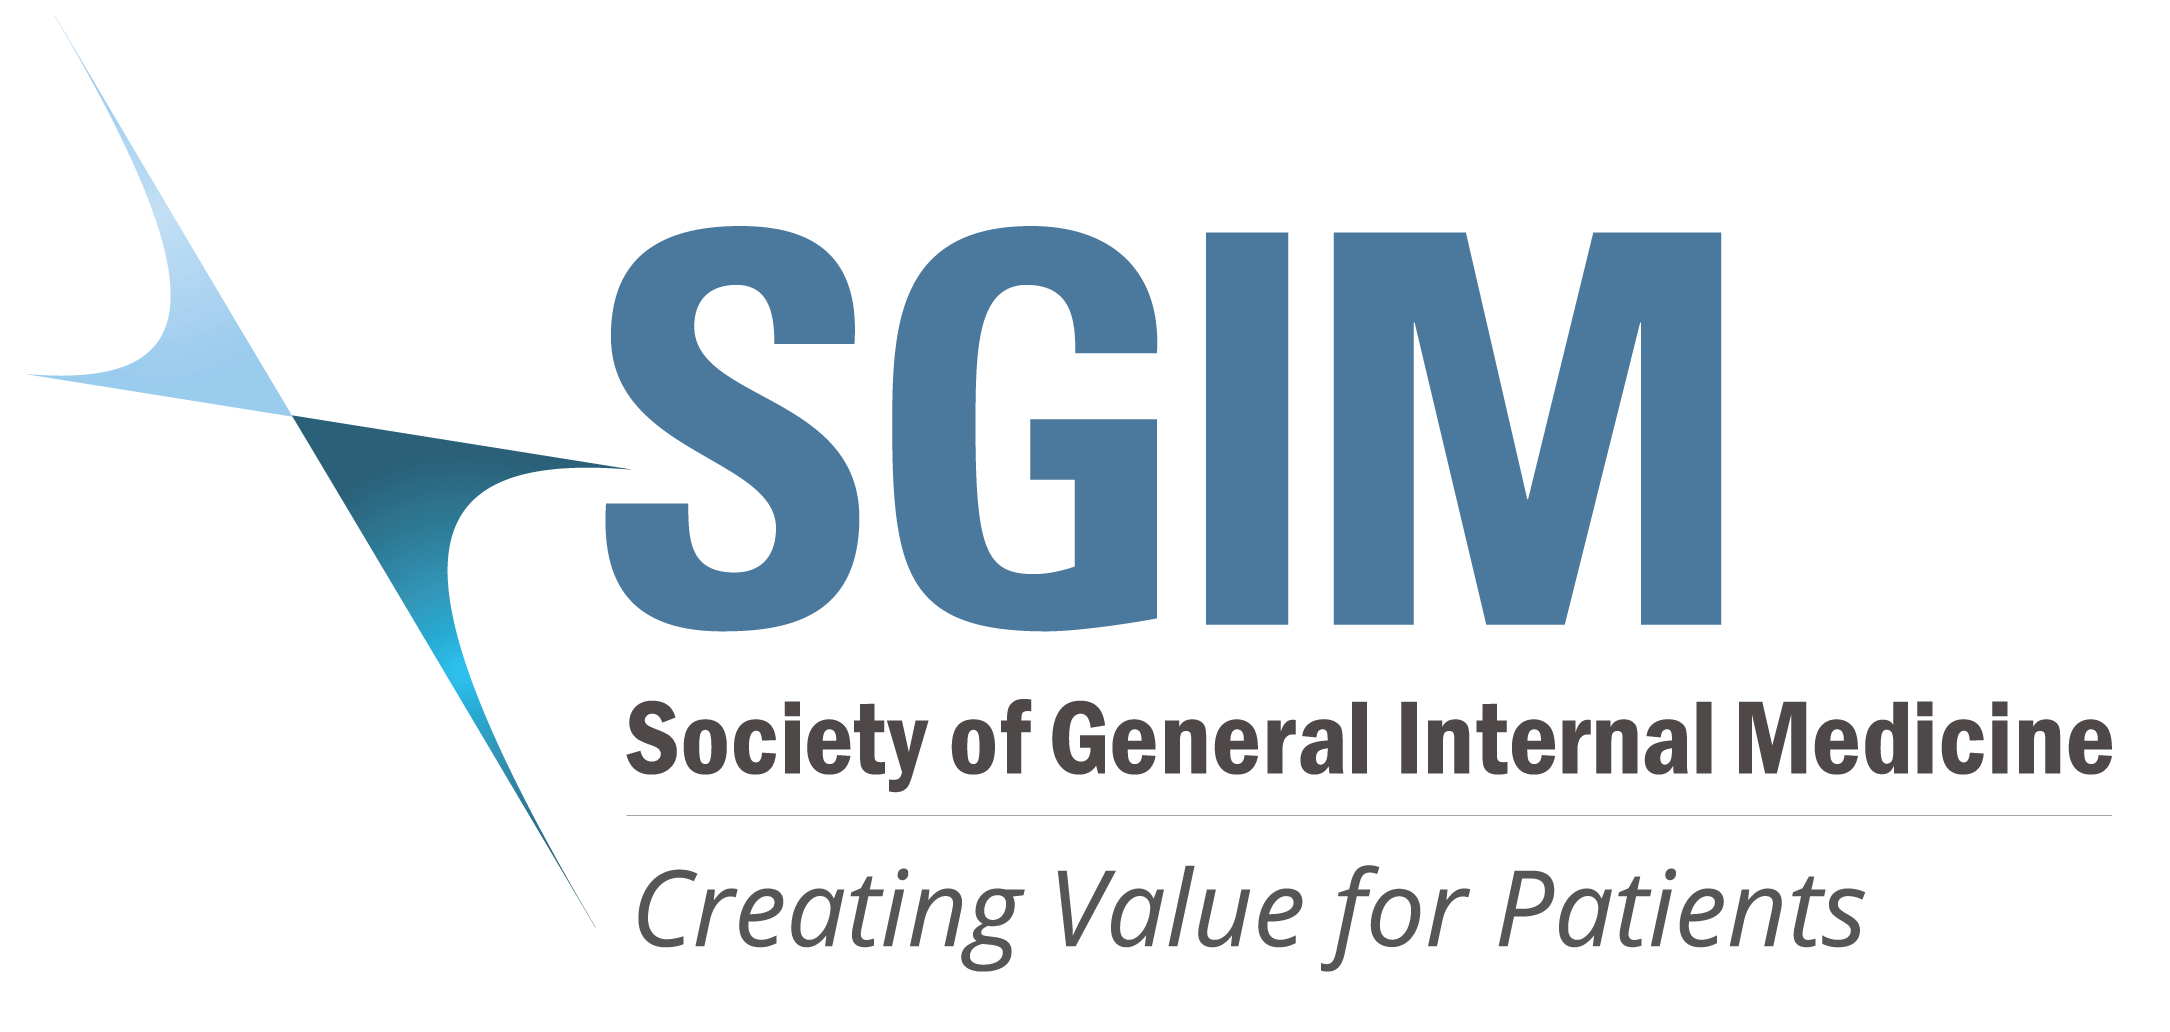 Society of General Internal Medicine